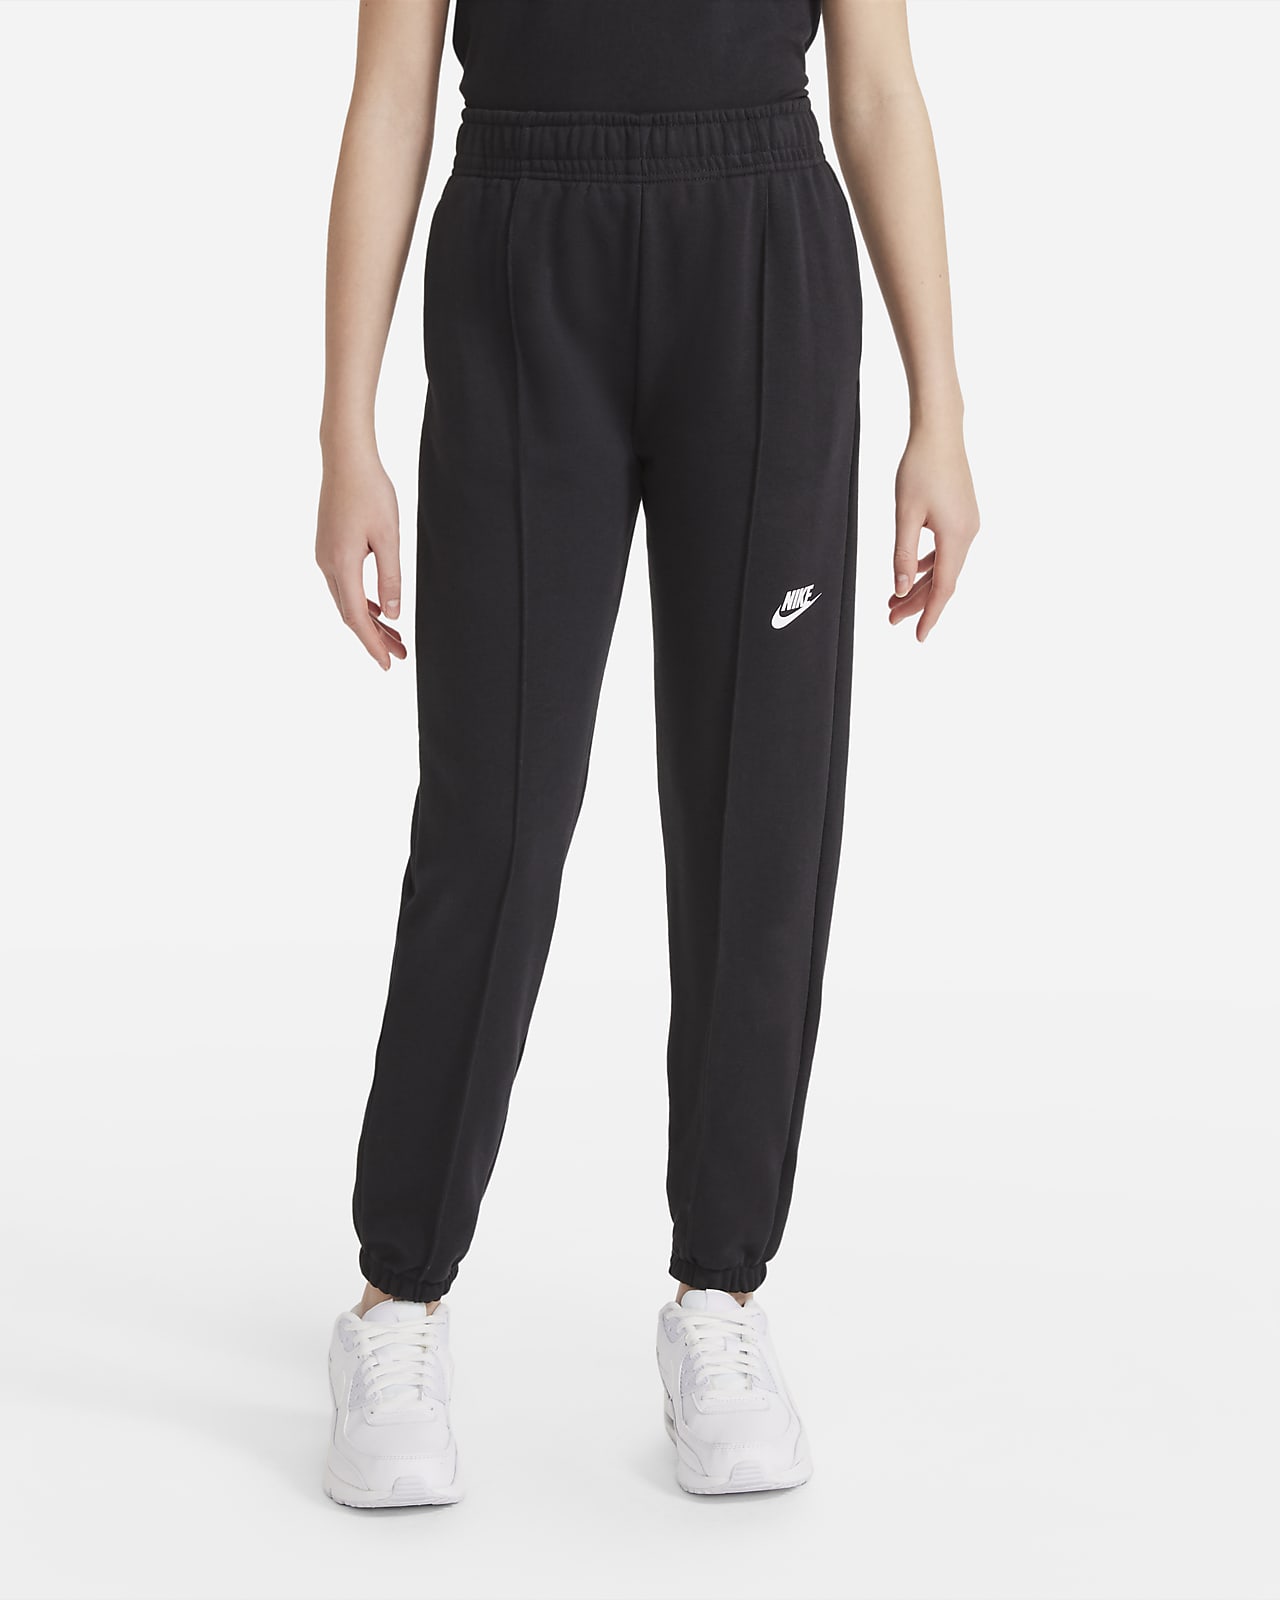 €75 - €100 Standard Dance Trousers. Nike SI